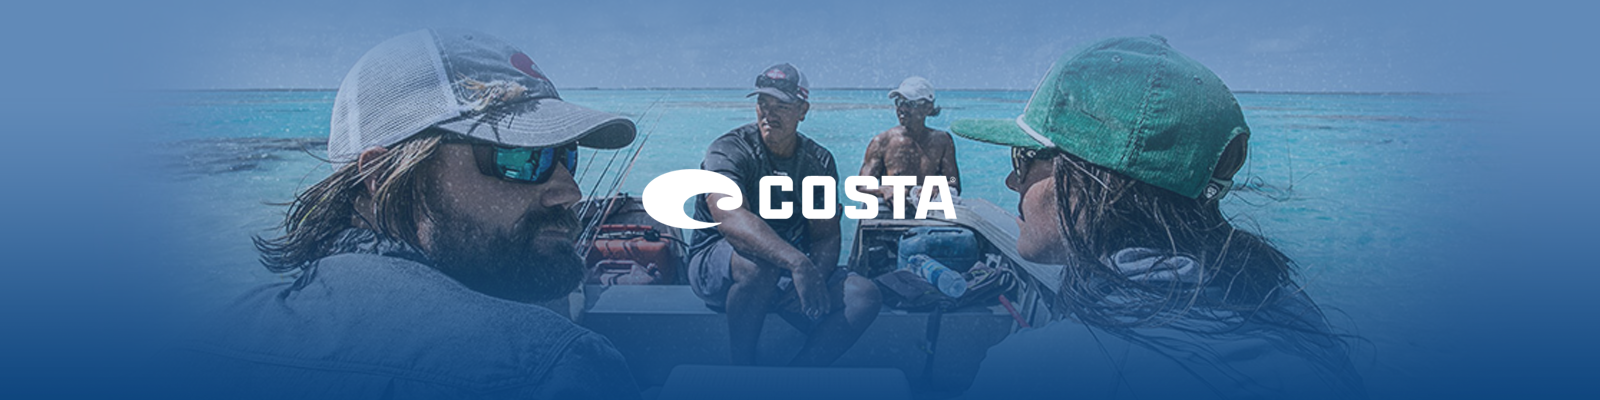 Costa Brand PLP Banner